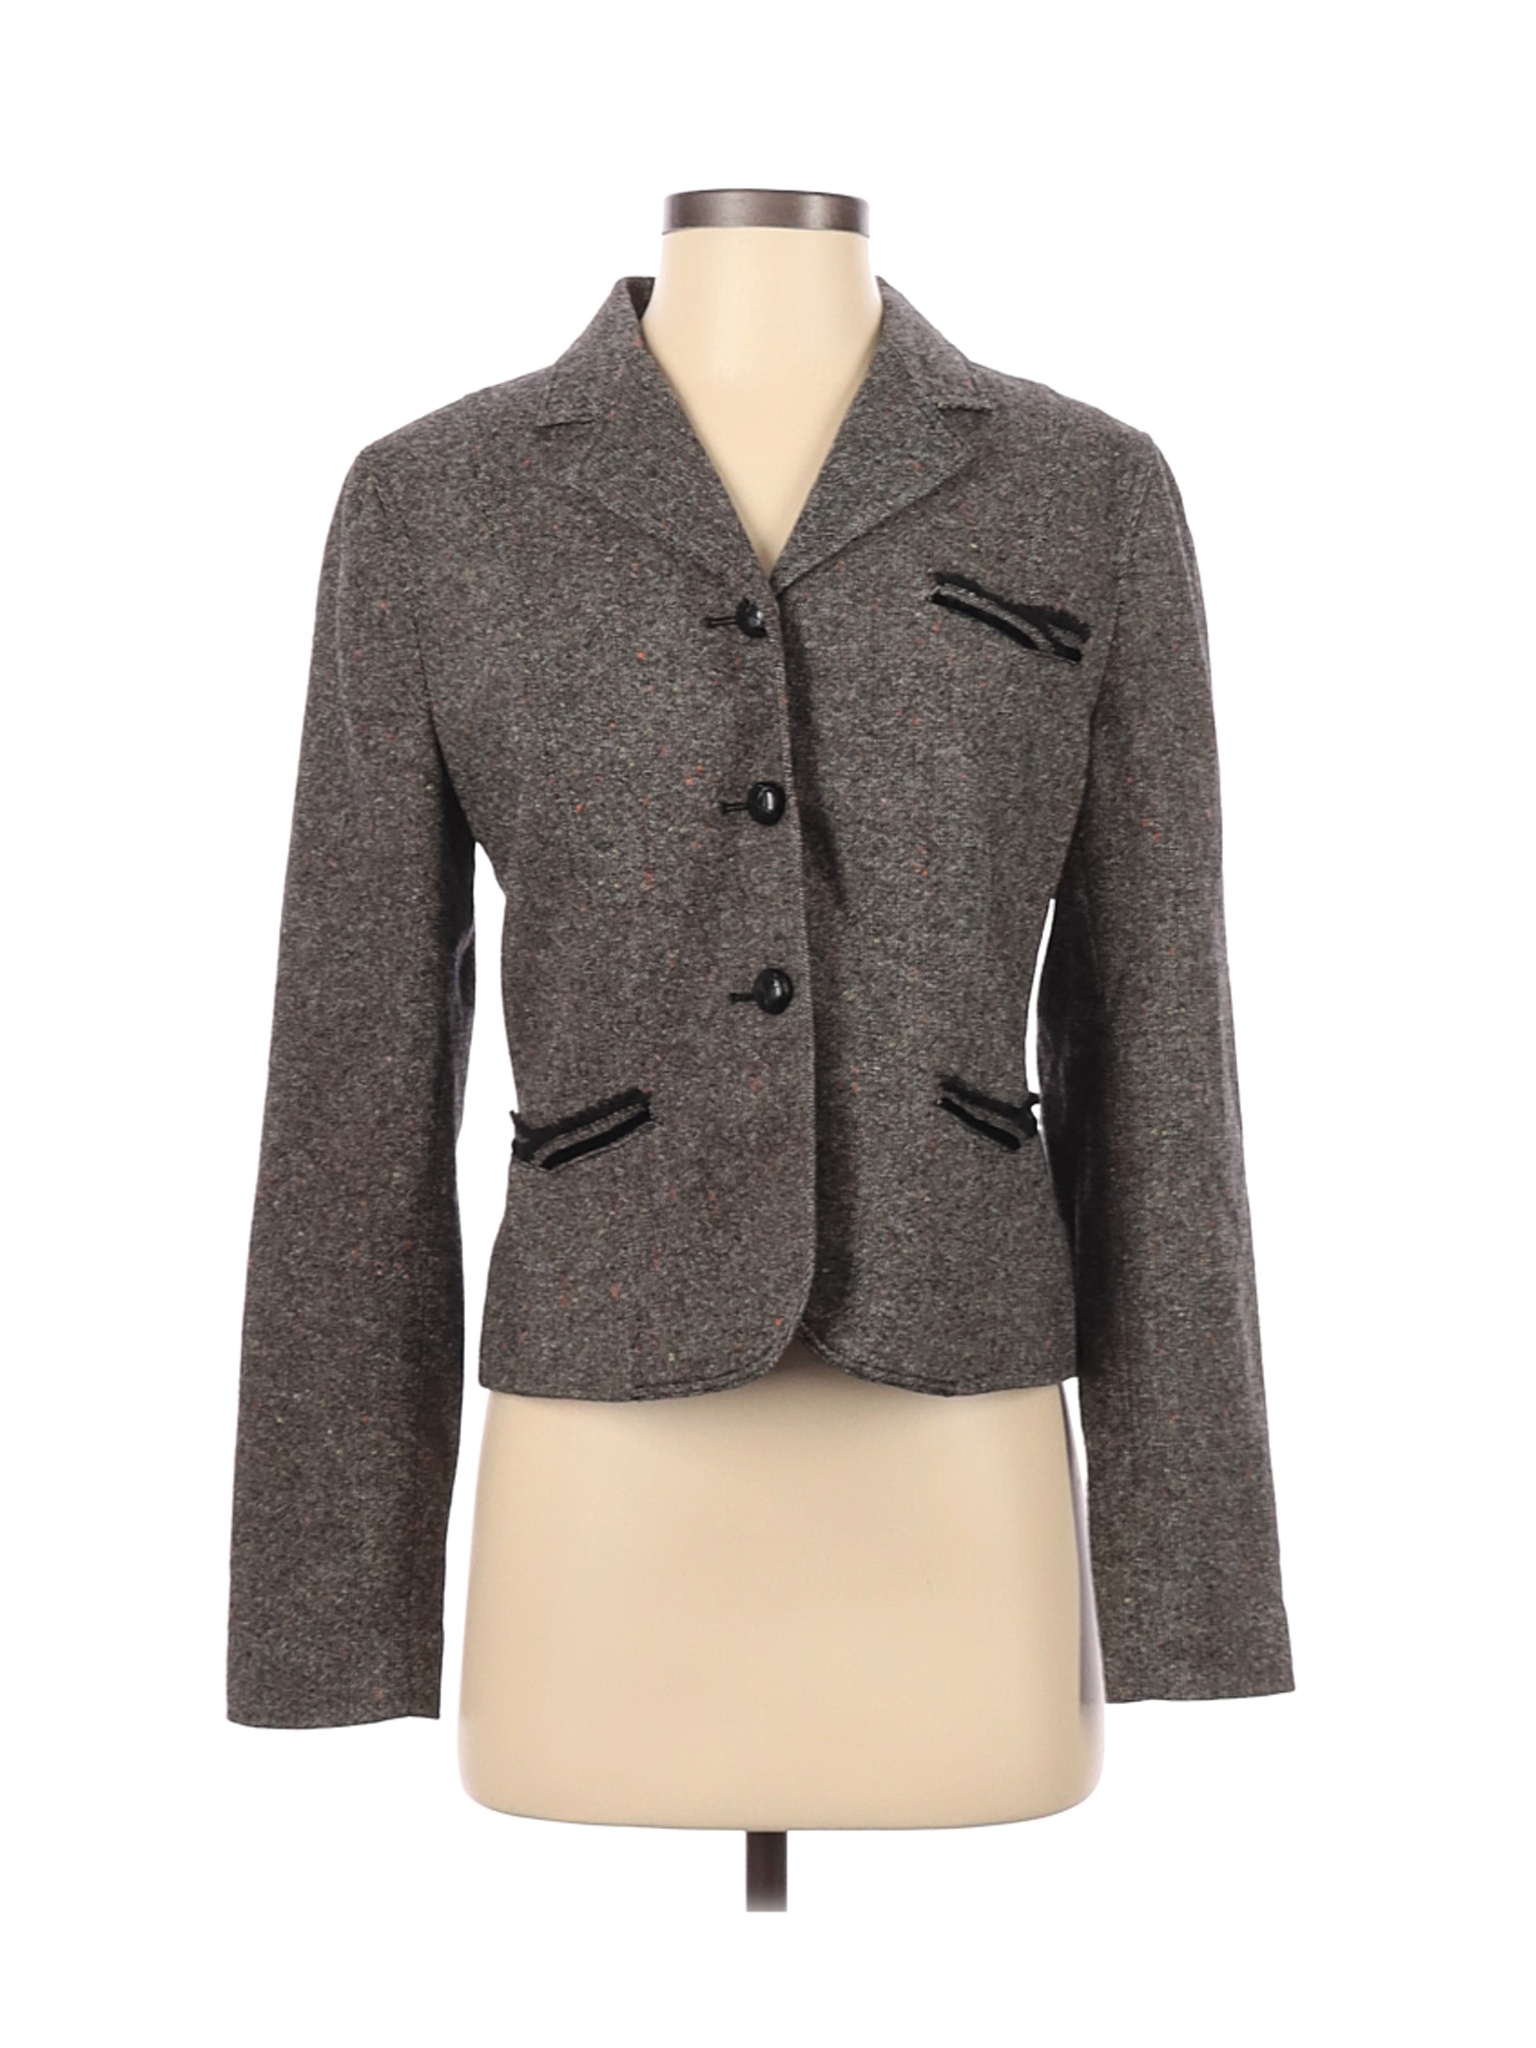 The Limited Women Gray Wool Blazer S | eBay